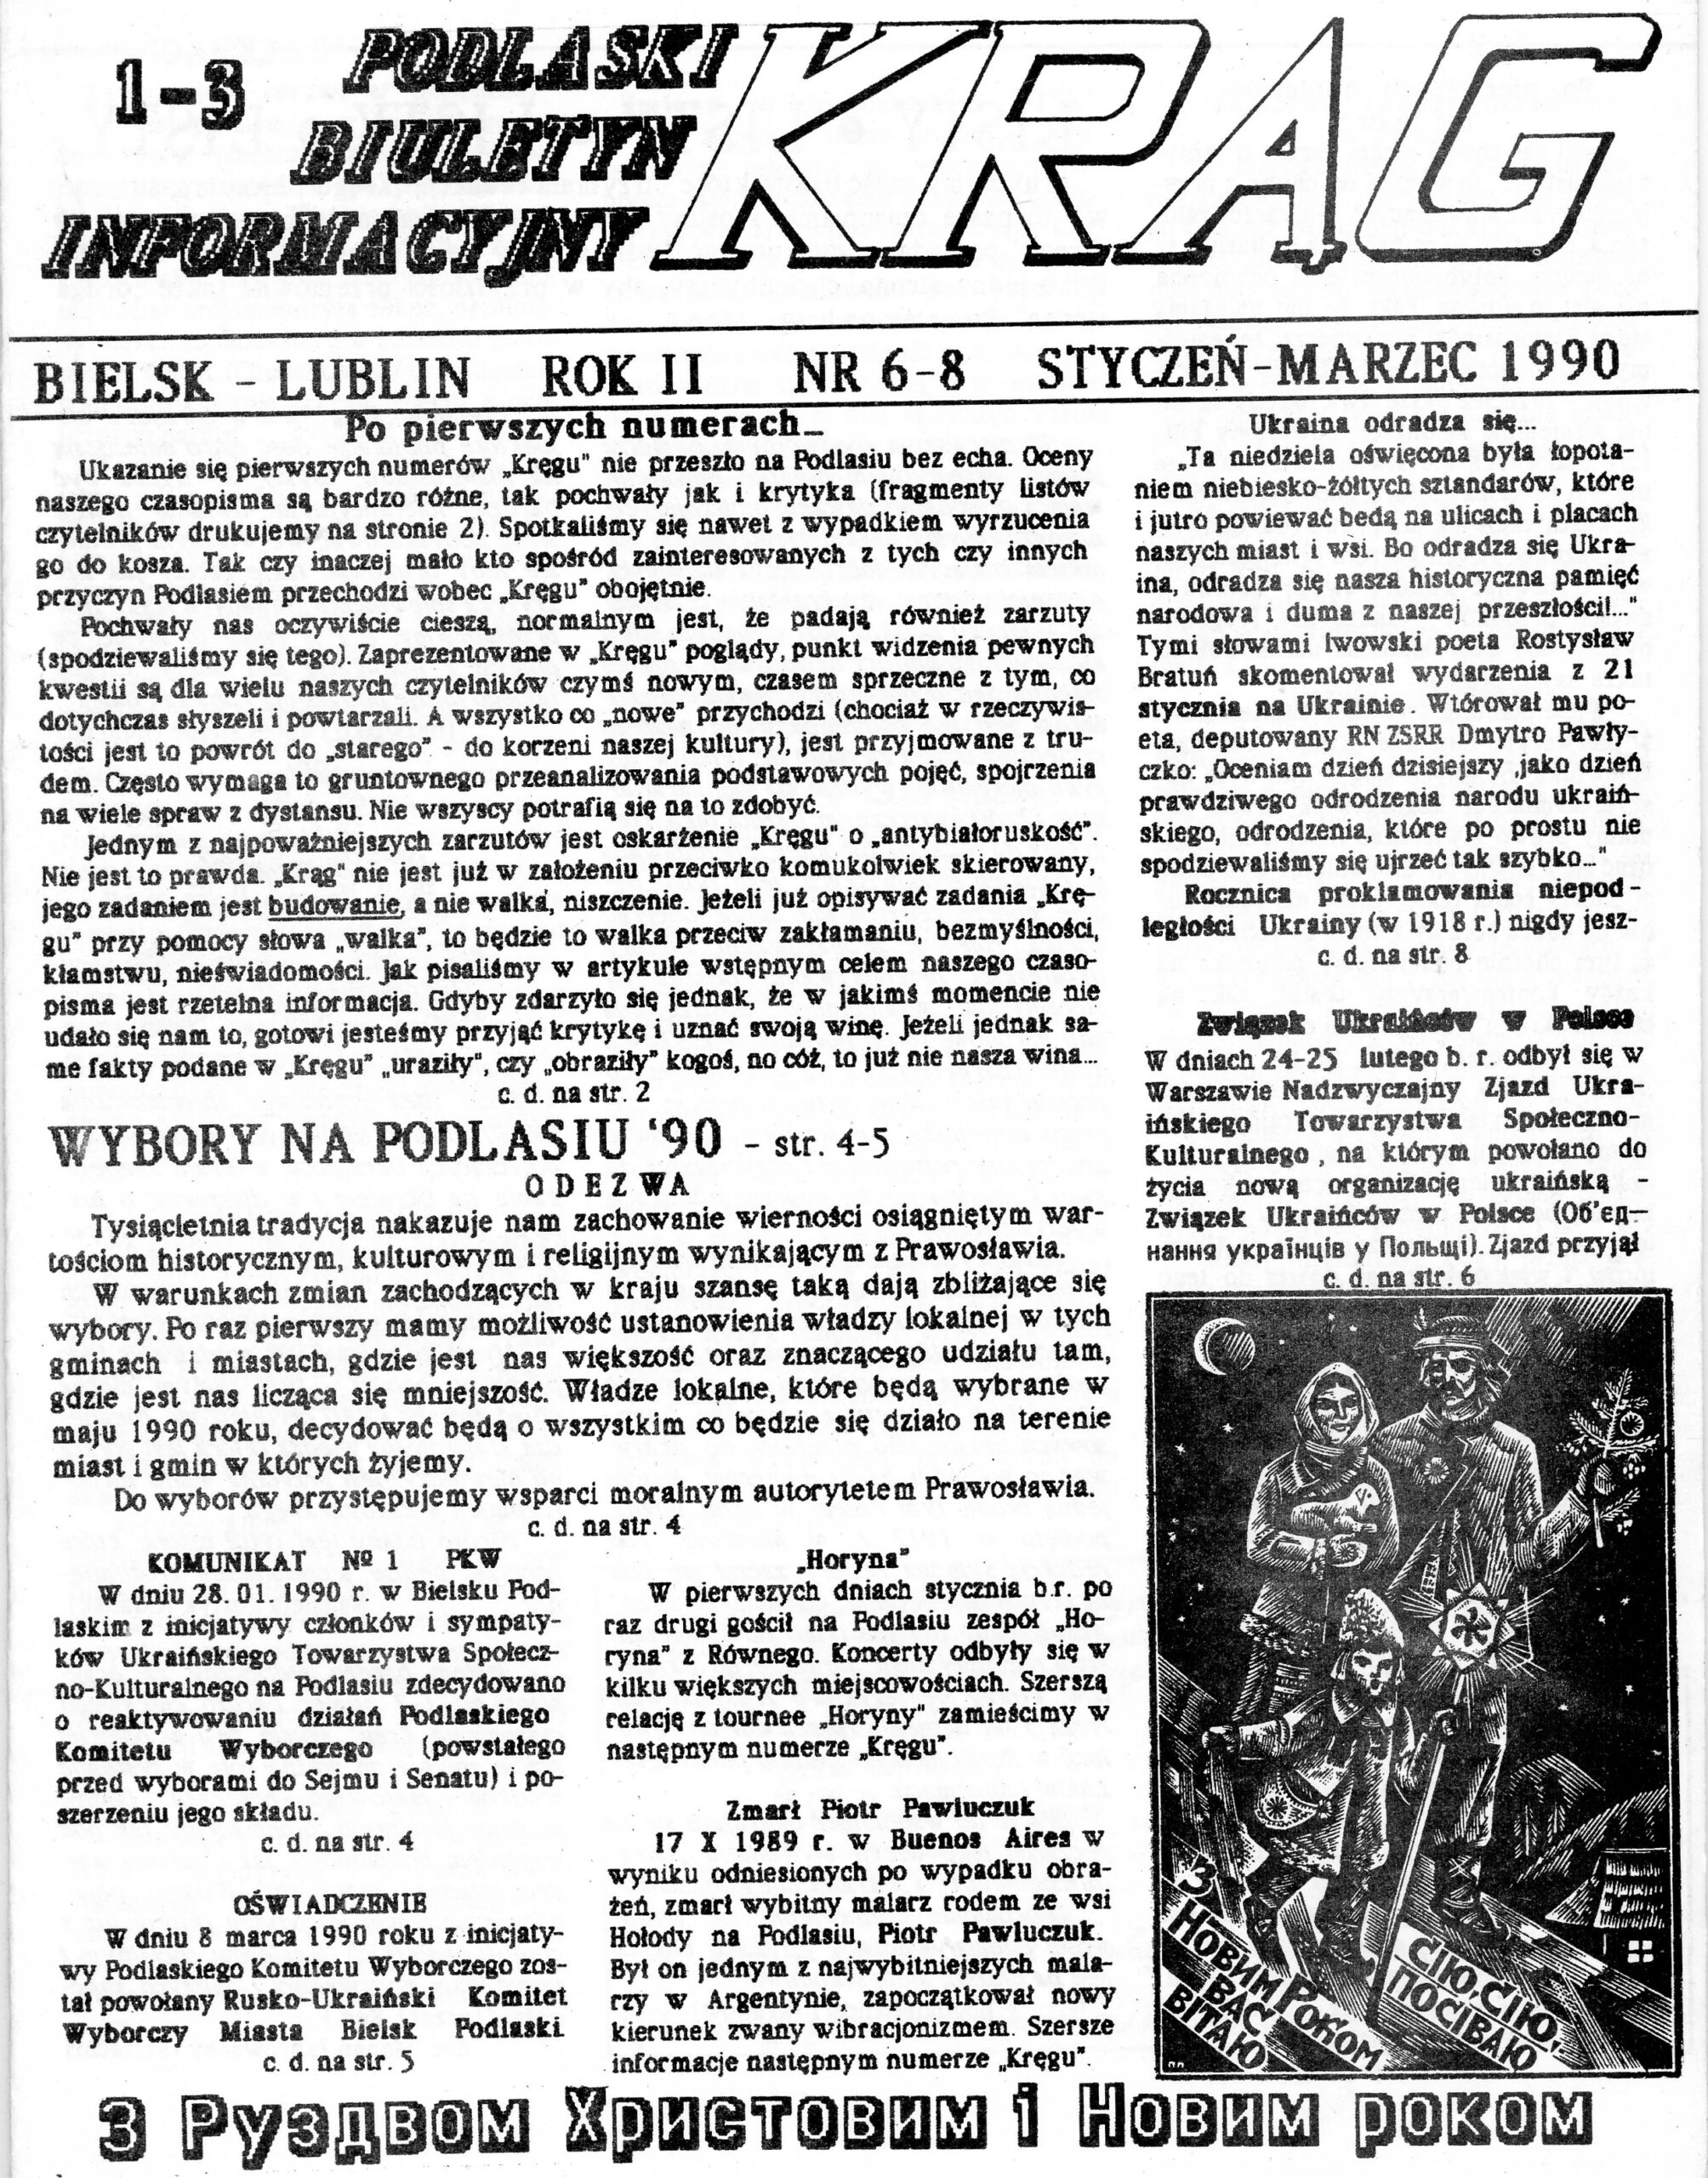 Пiдляськiй Iнформацiйний Бюлетинь Krąg, Бiльськ – Люблiн, нр 6-8, 1-3.1990 р.